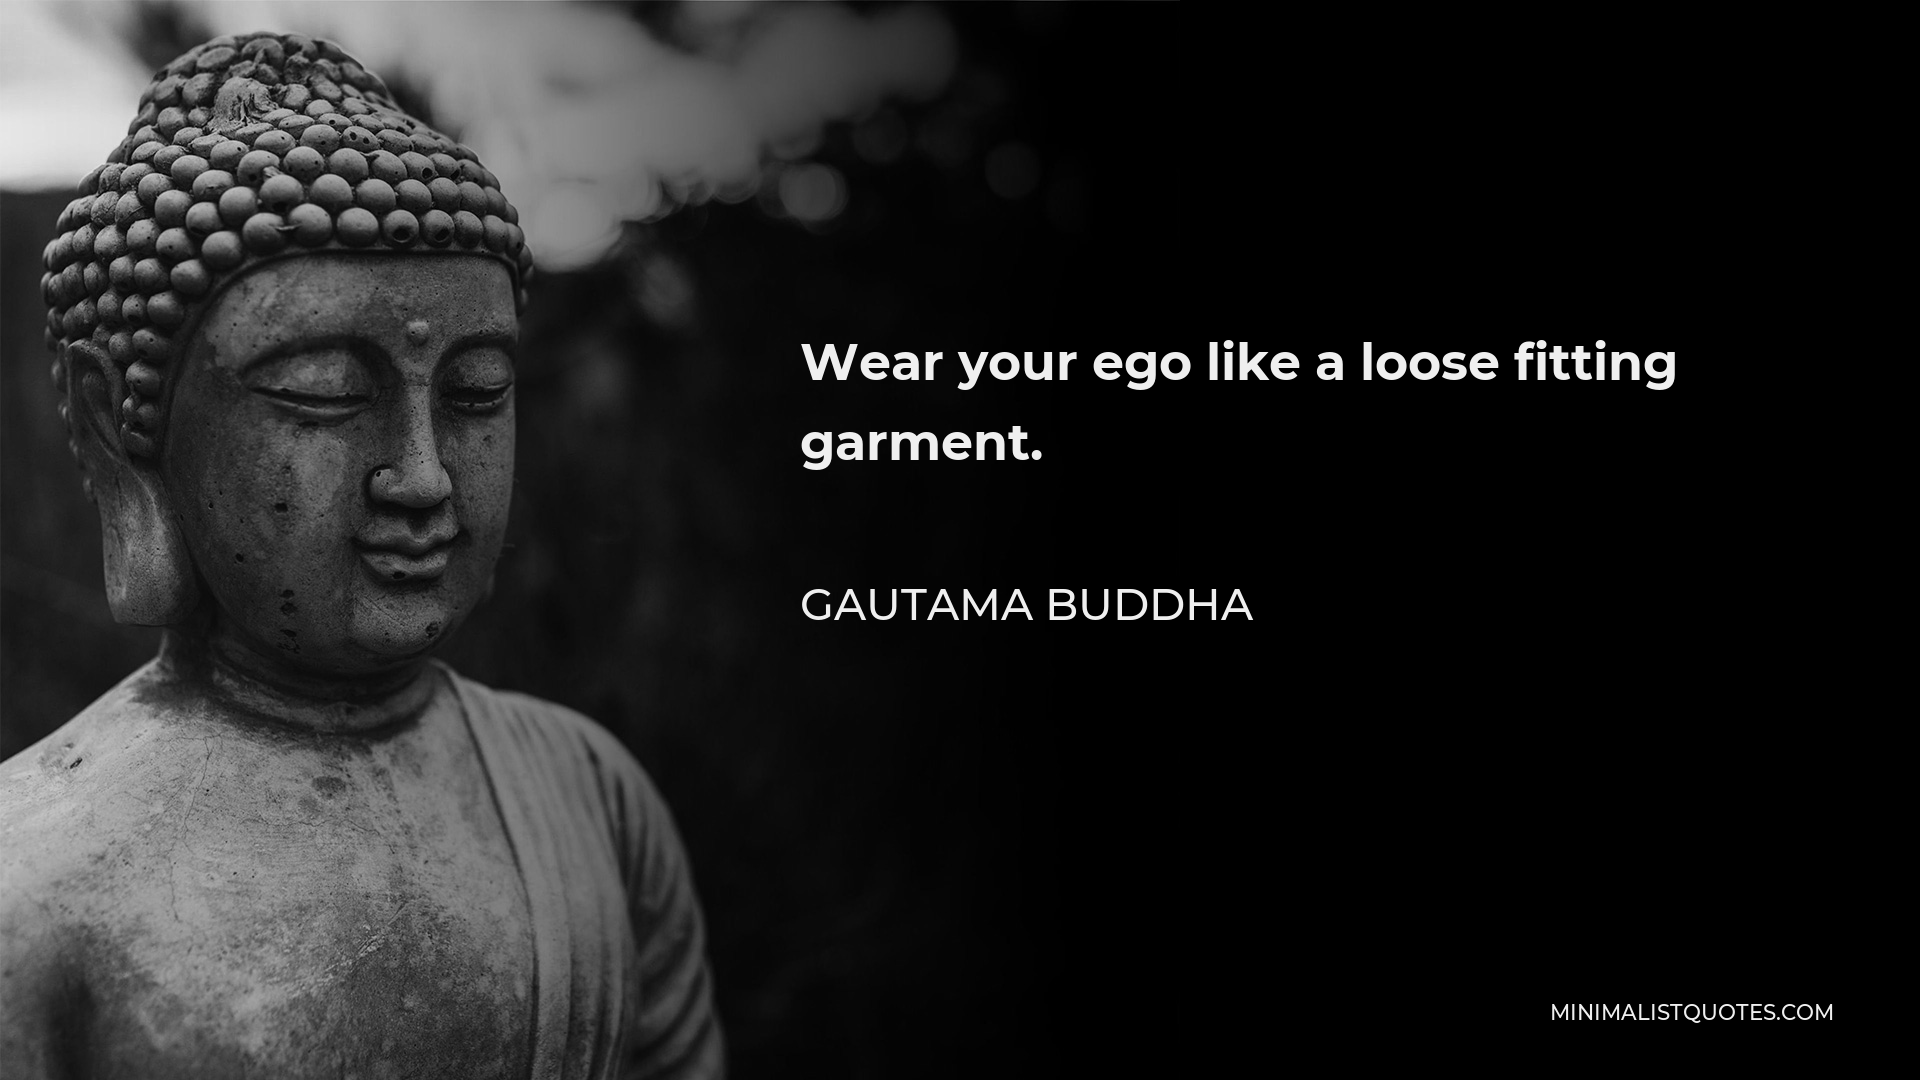 Gautama Buddha Quote - Wear your ego like a loose fitting garment.